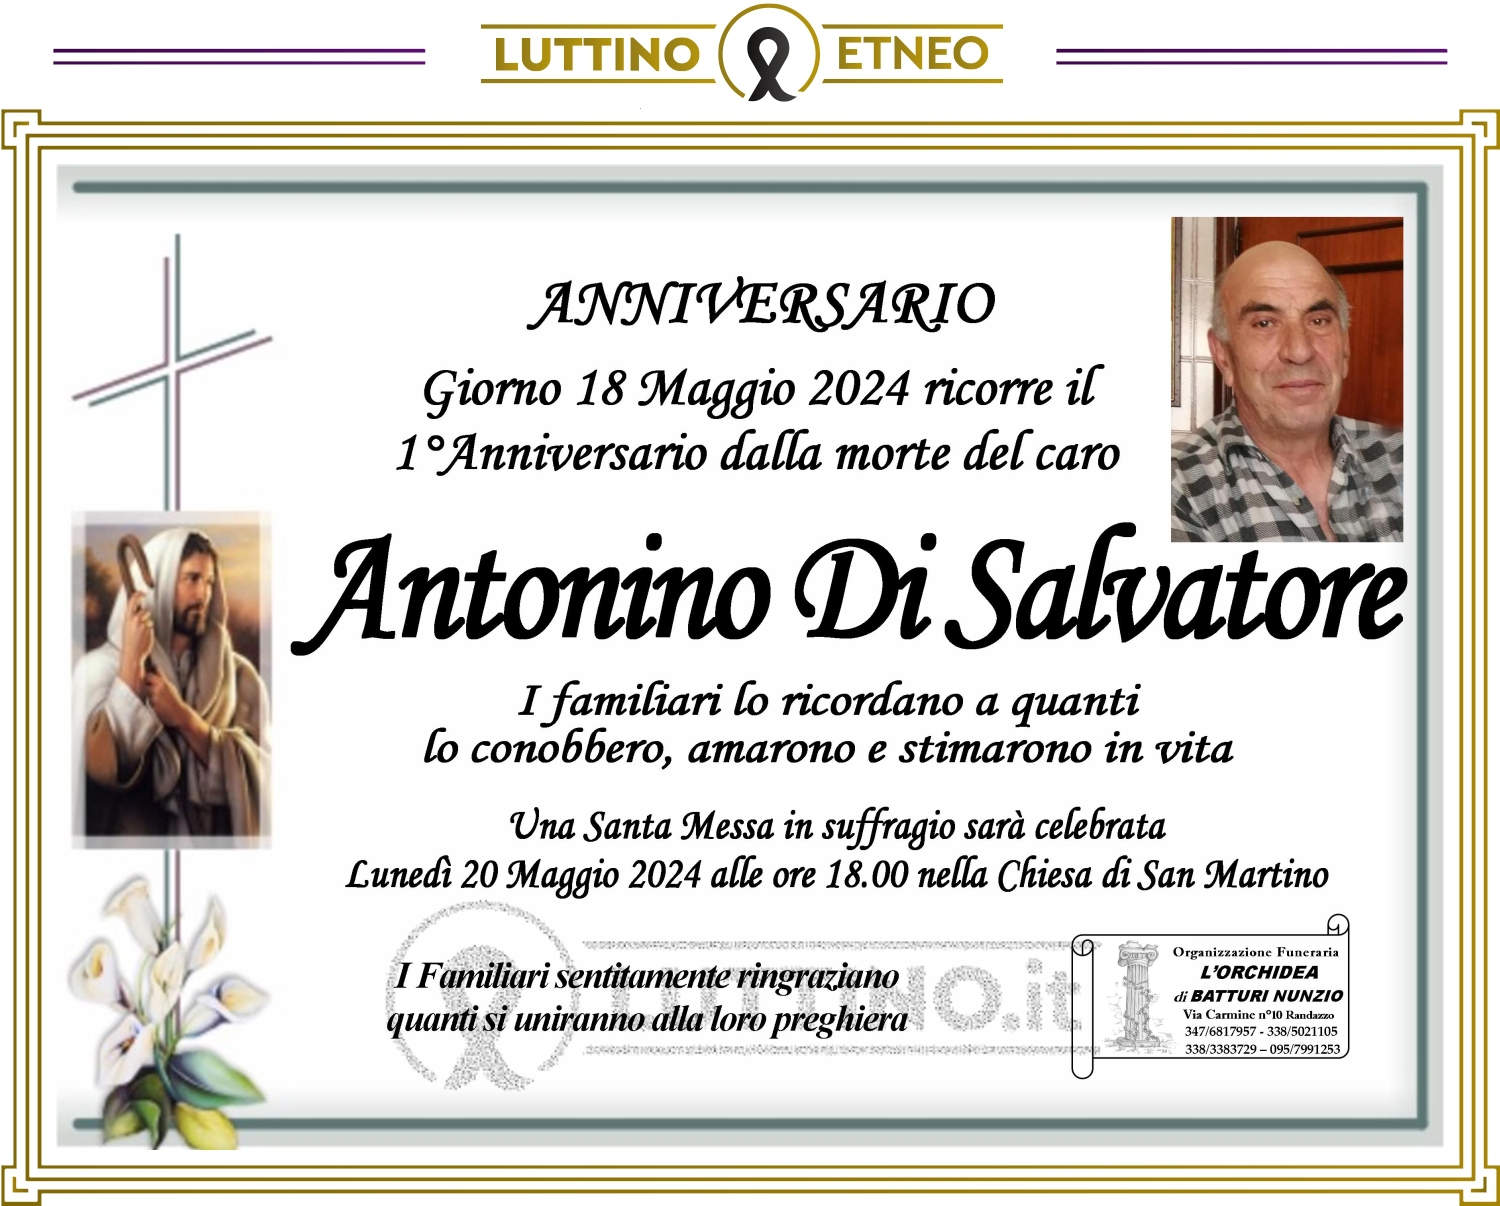 Antonino Di Salvatore